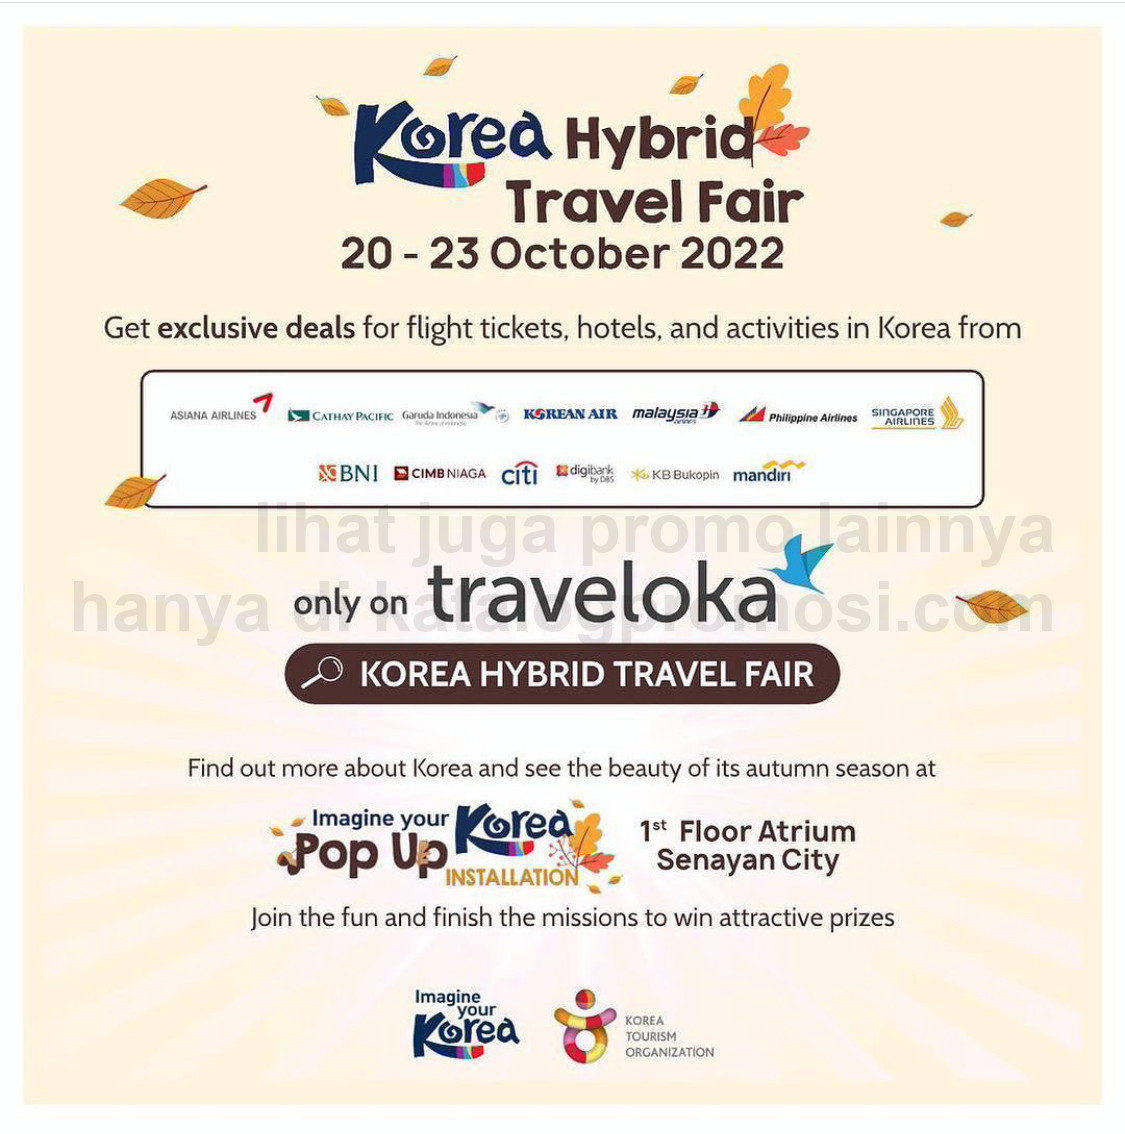 Korea Hybrid Travel Fair 2022